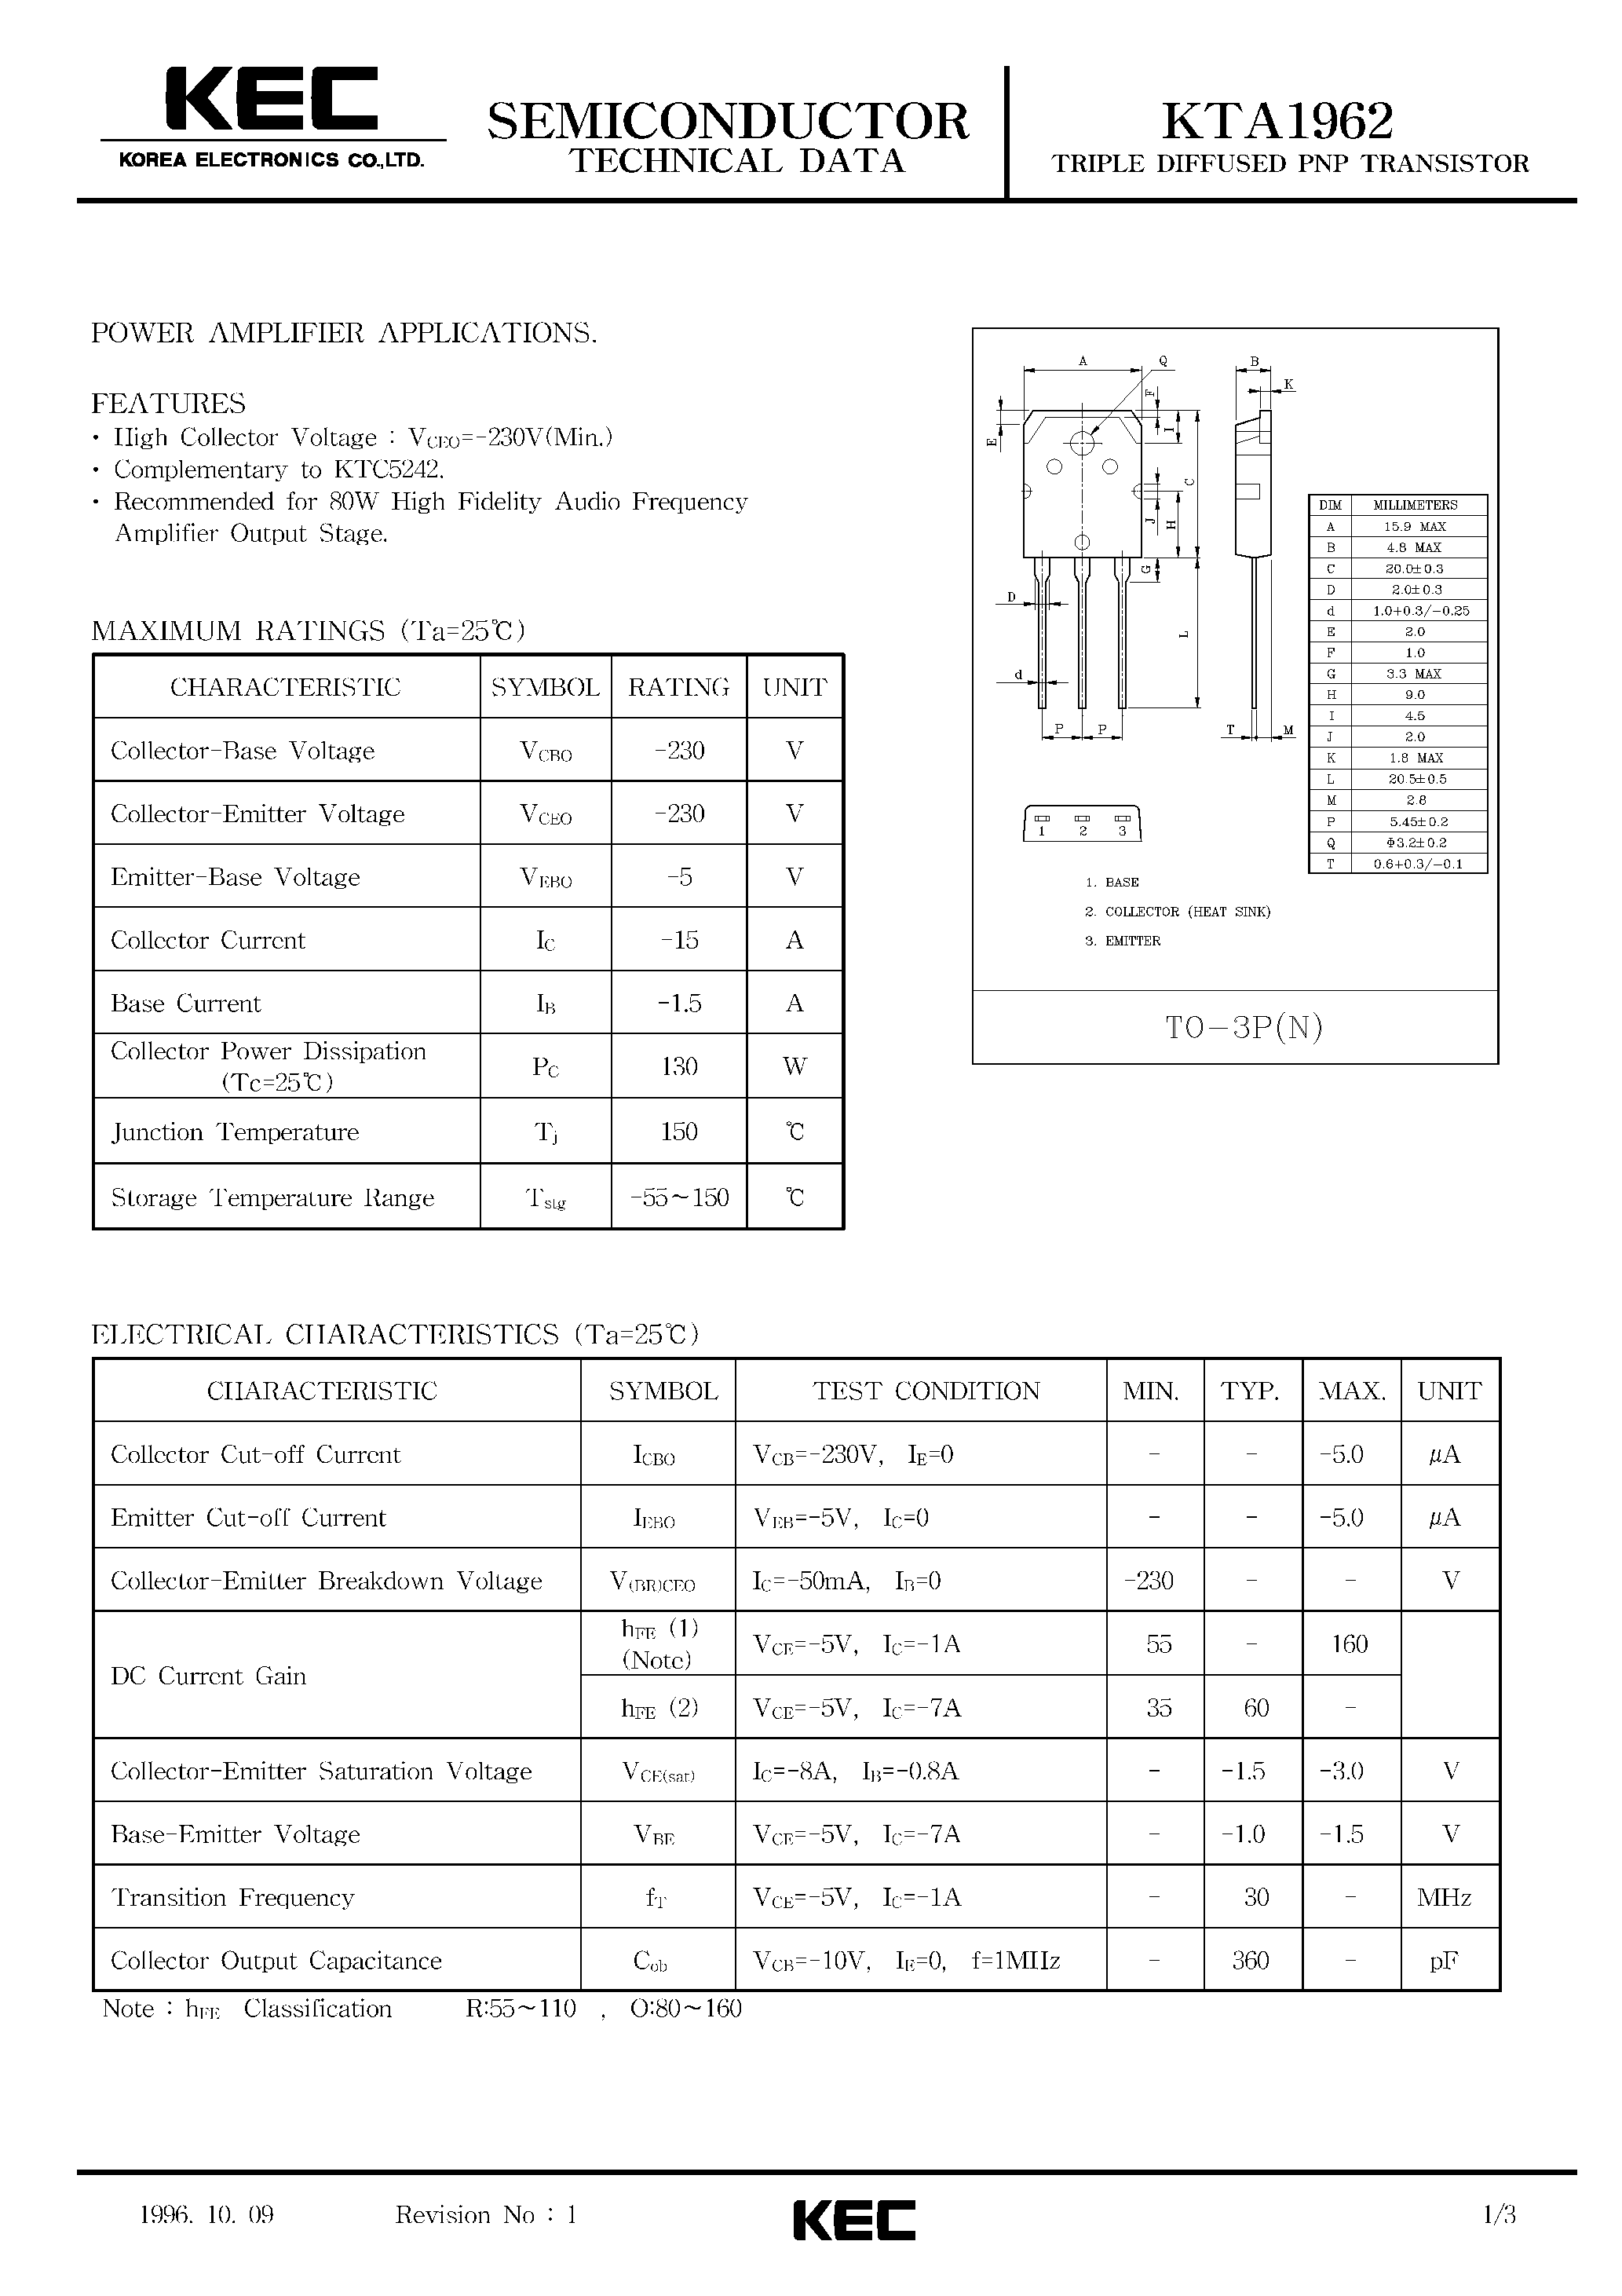 Datasheet KTA1962 - TRIPLE DIFFUSED PNP TRANSISTOR(POWER AMPLIFIER) page 1